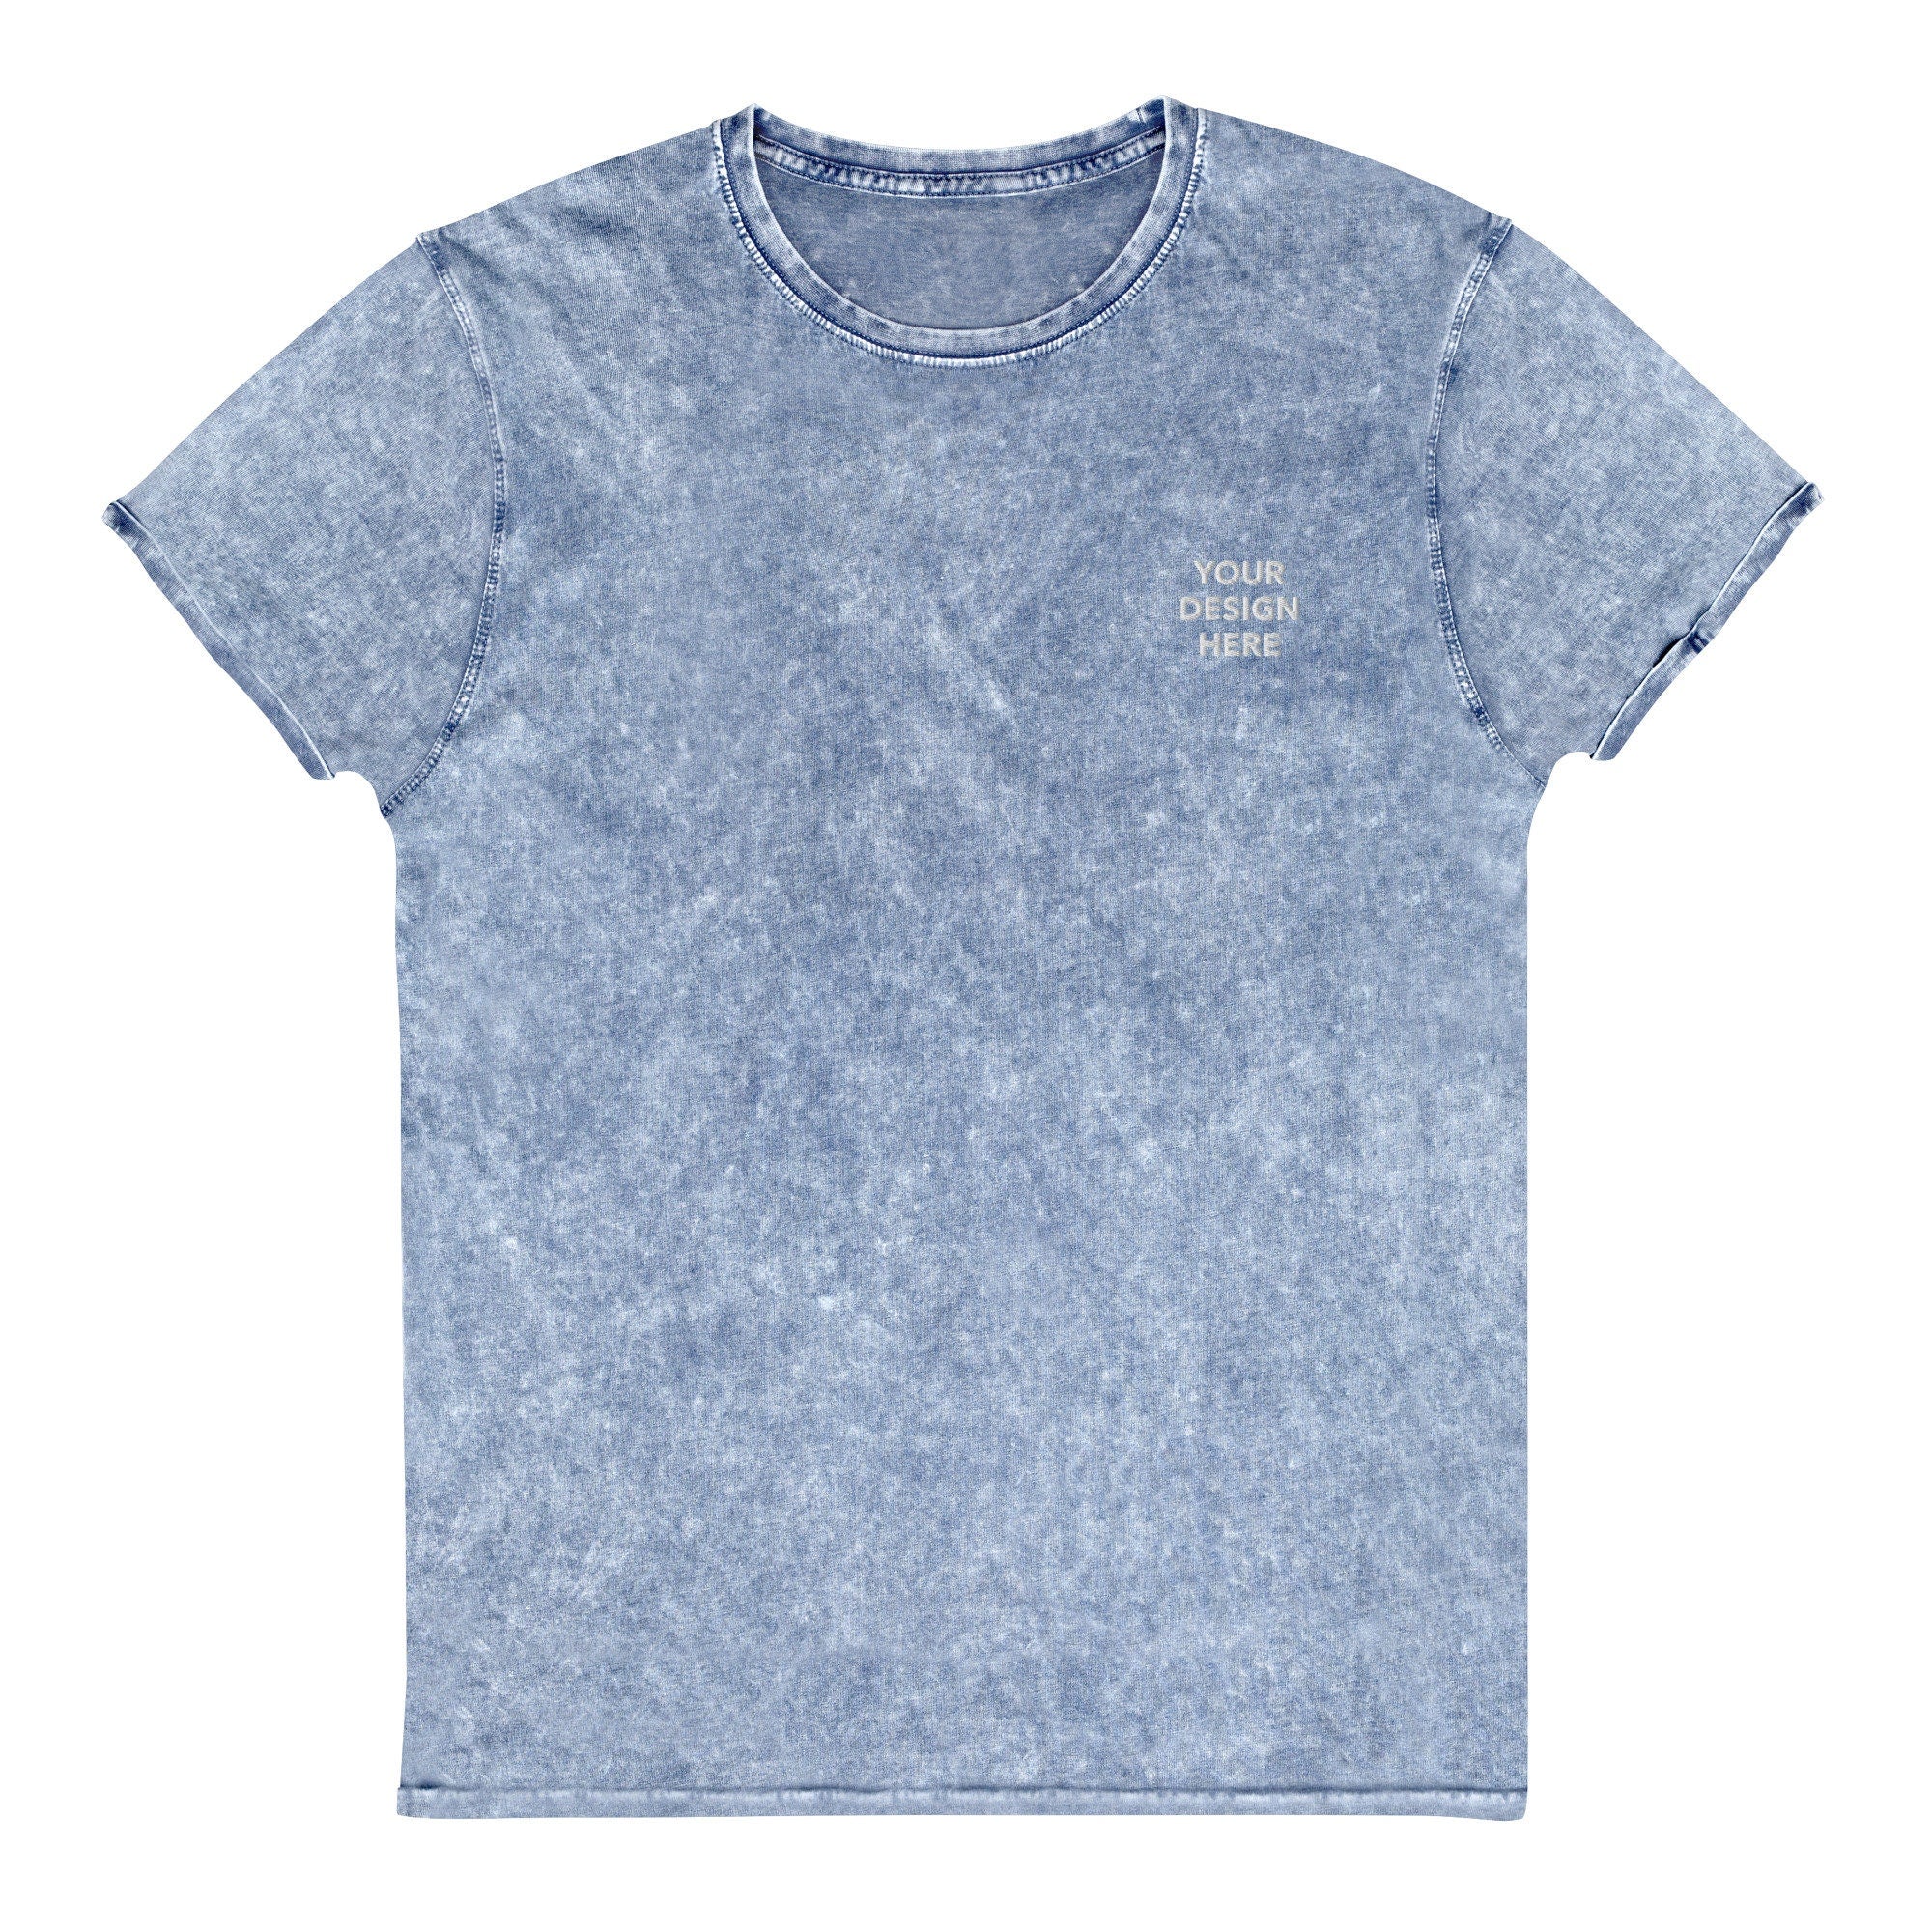 Personalized Embroidered Denim T-Shirt, Customized Logo Denim T-Shirt, Embroidery With Your Own Text or Design, Handmade Denim Tee